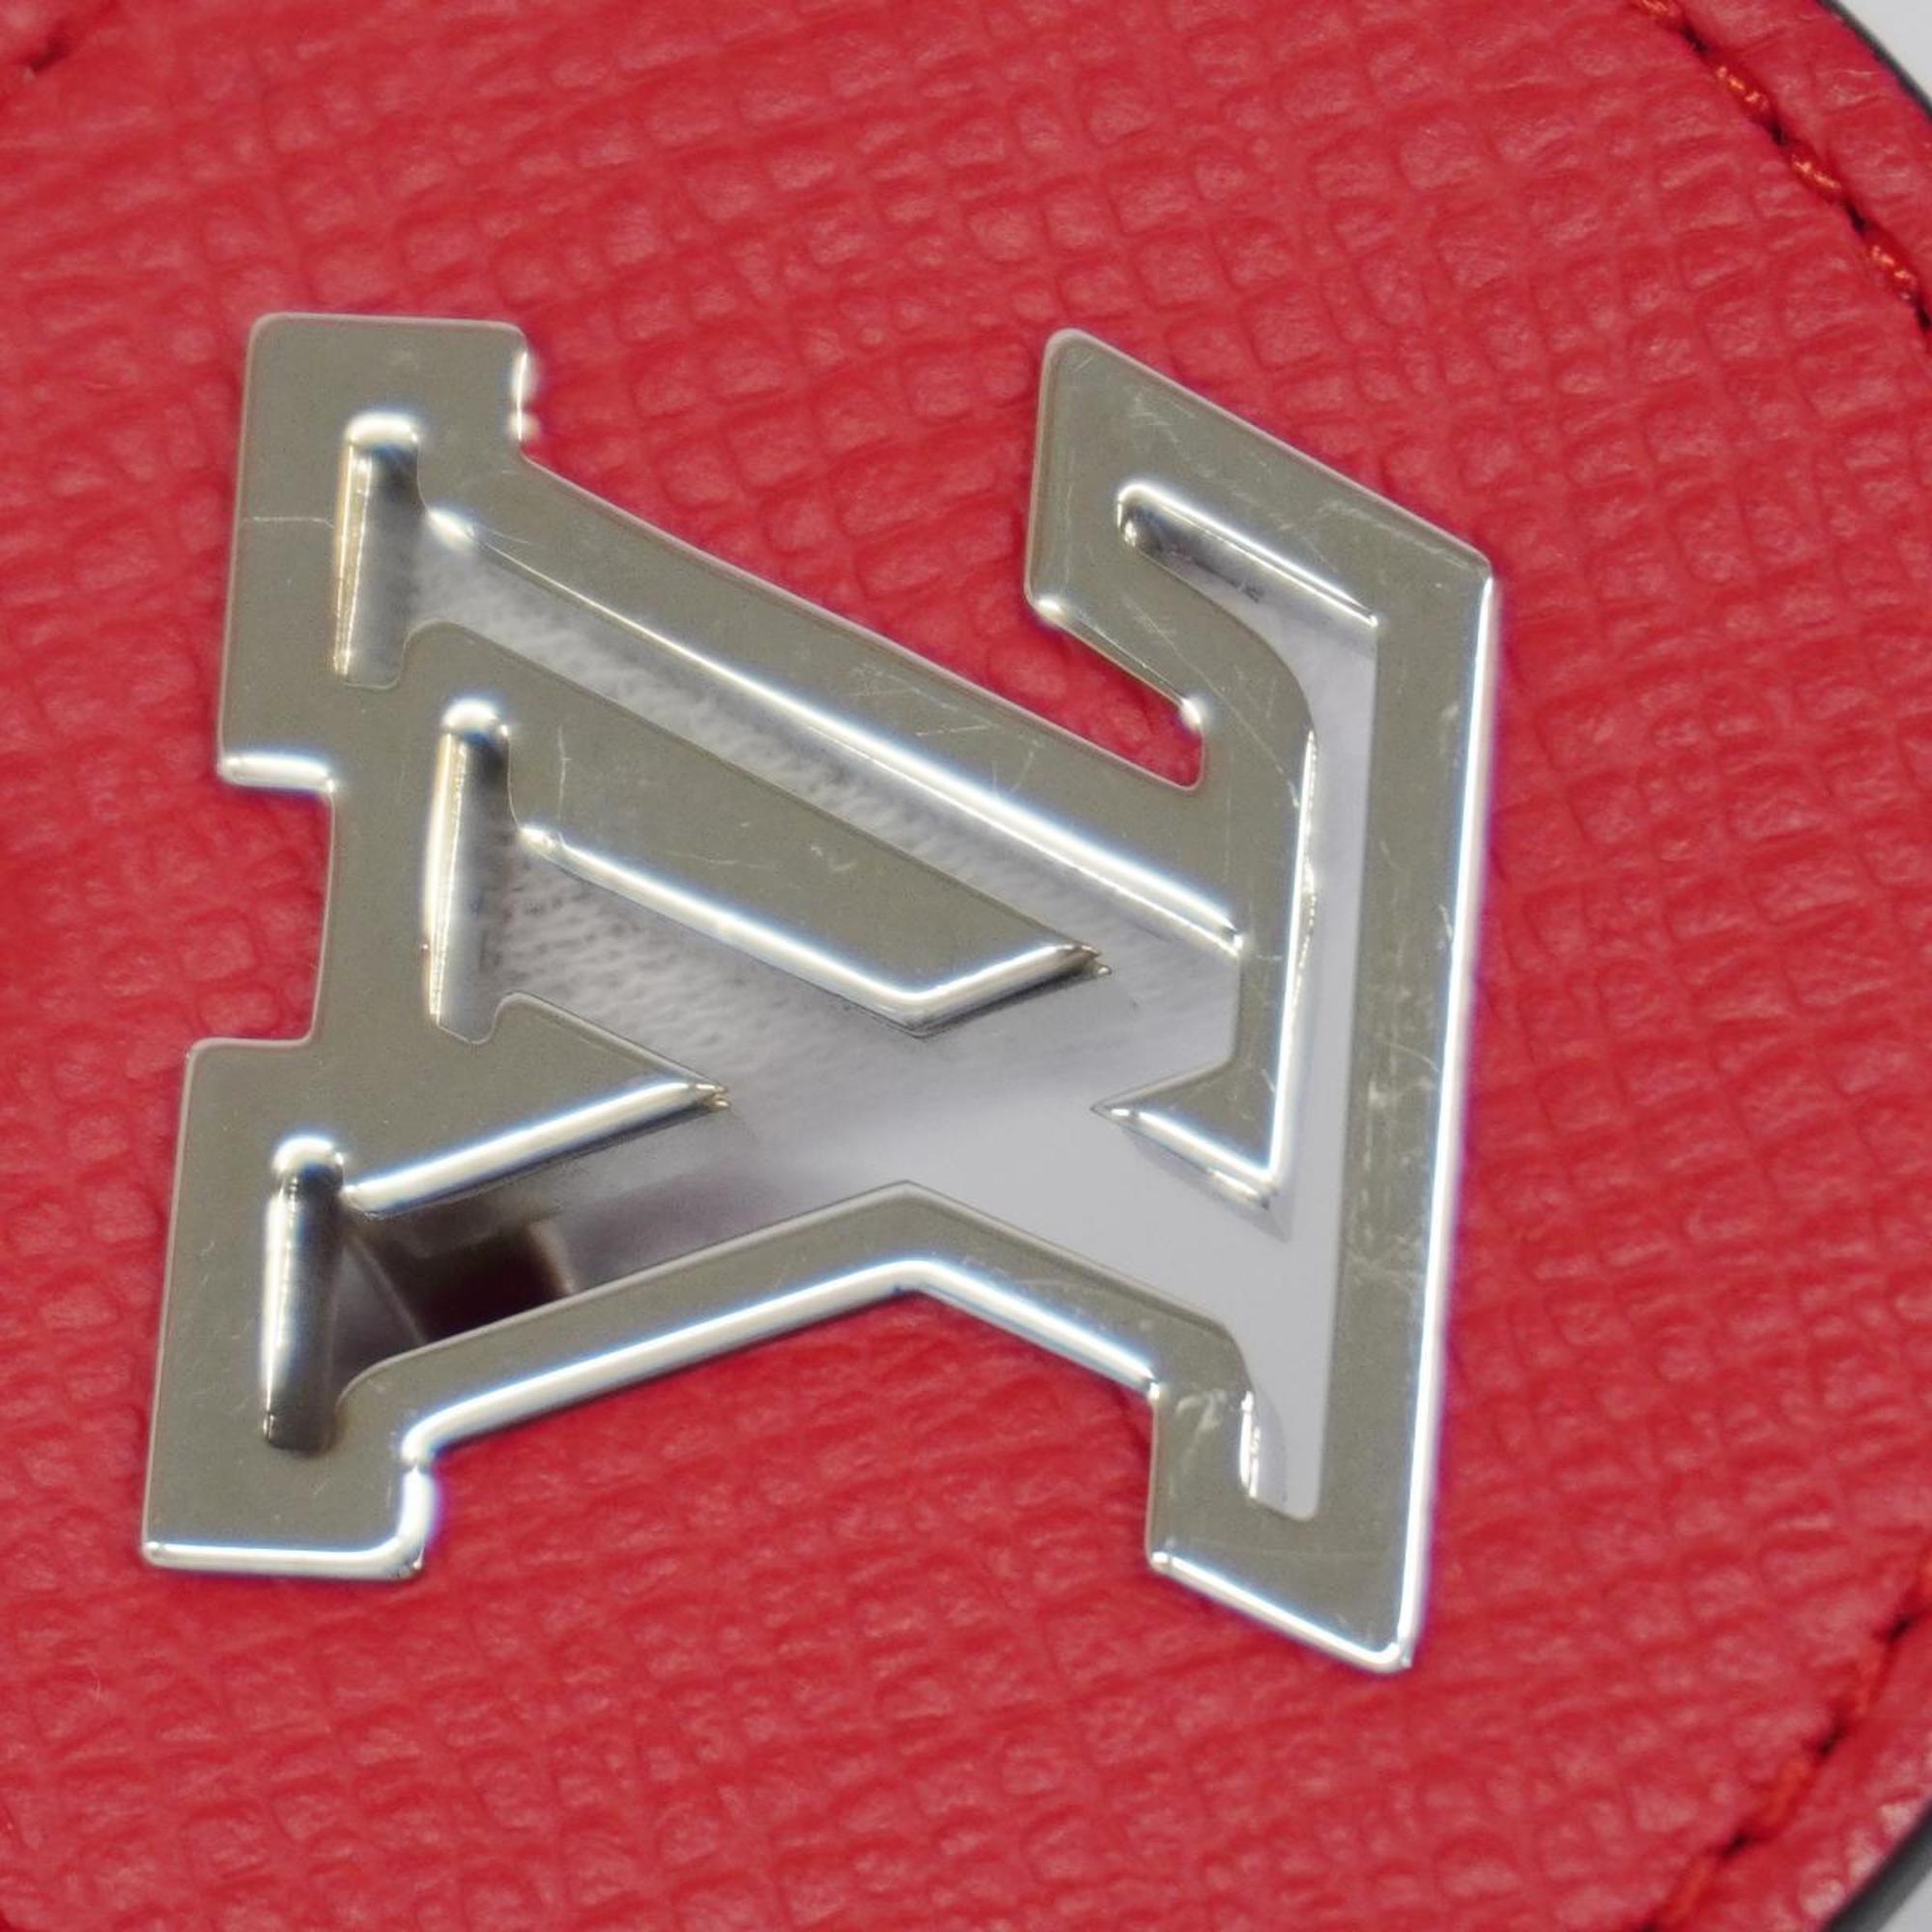 Louis Vuitton Keychain Monogram Portecle LV Circle Eyelet M64170 Red Men's